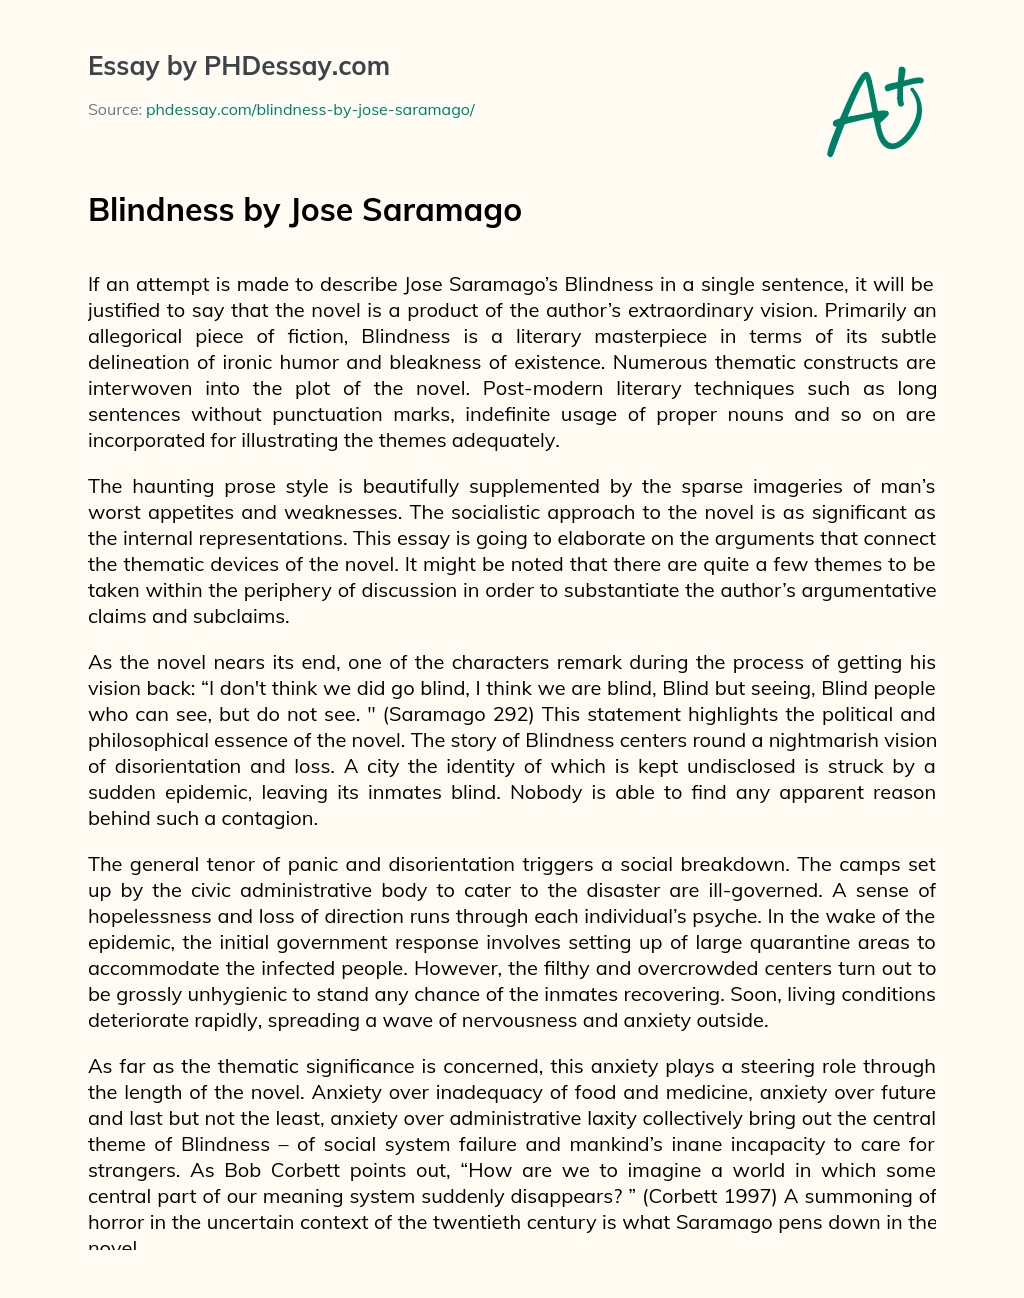 Blindness by Jose Saramago essay